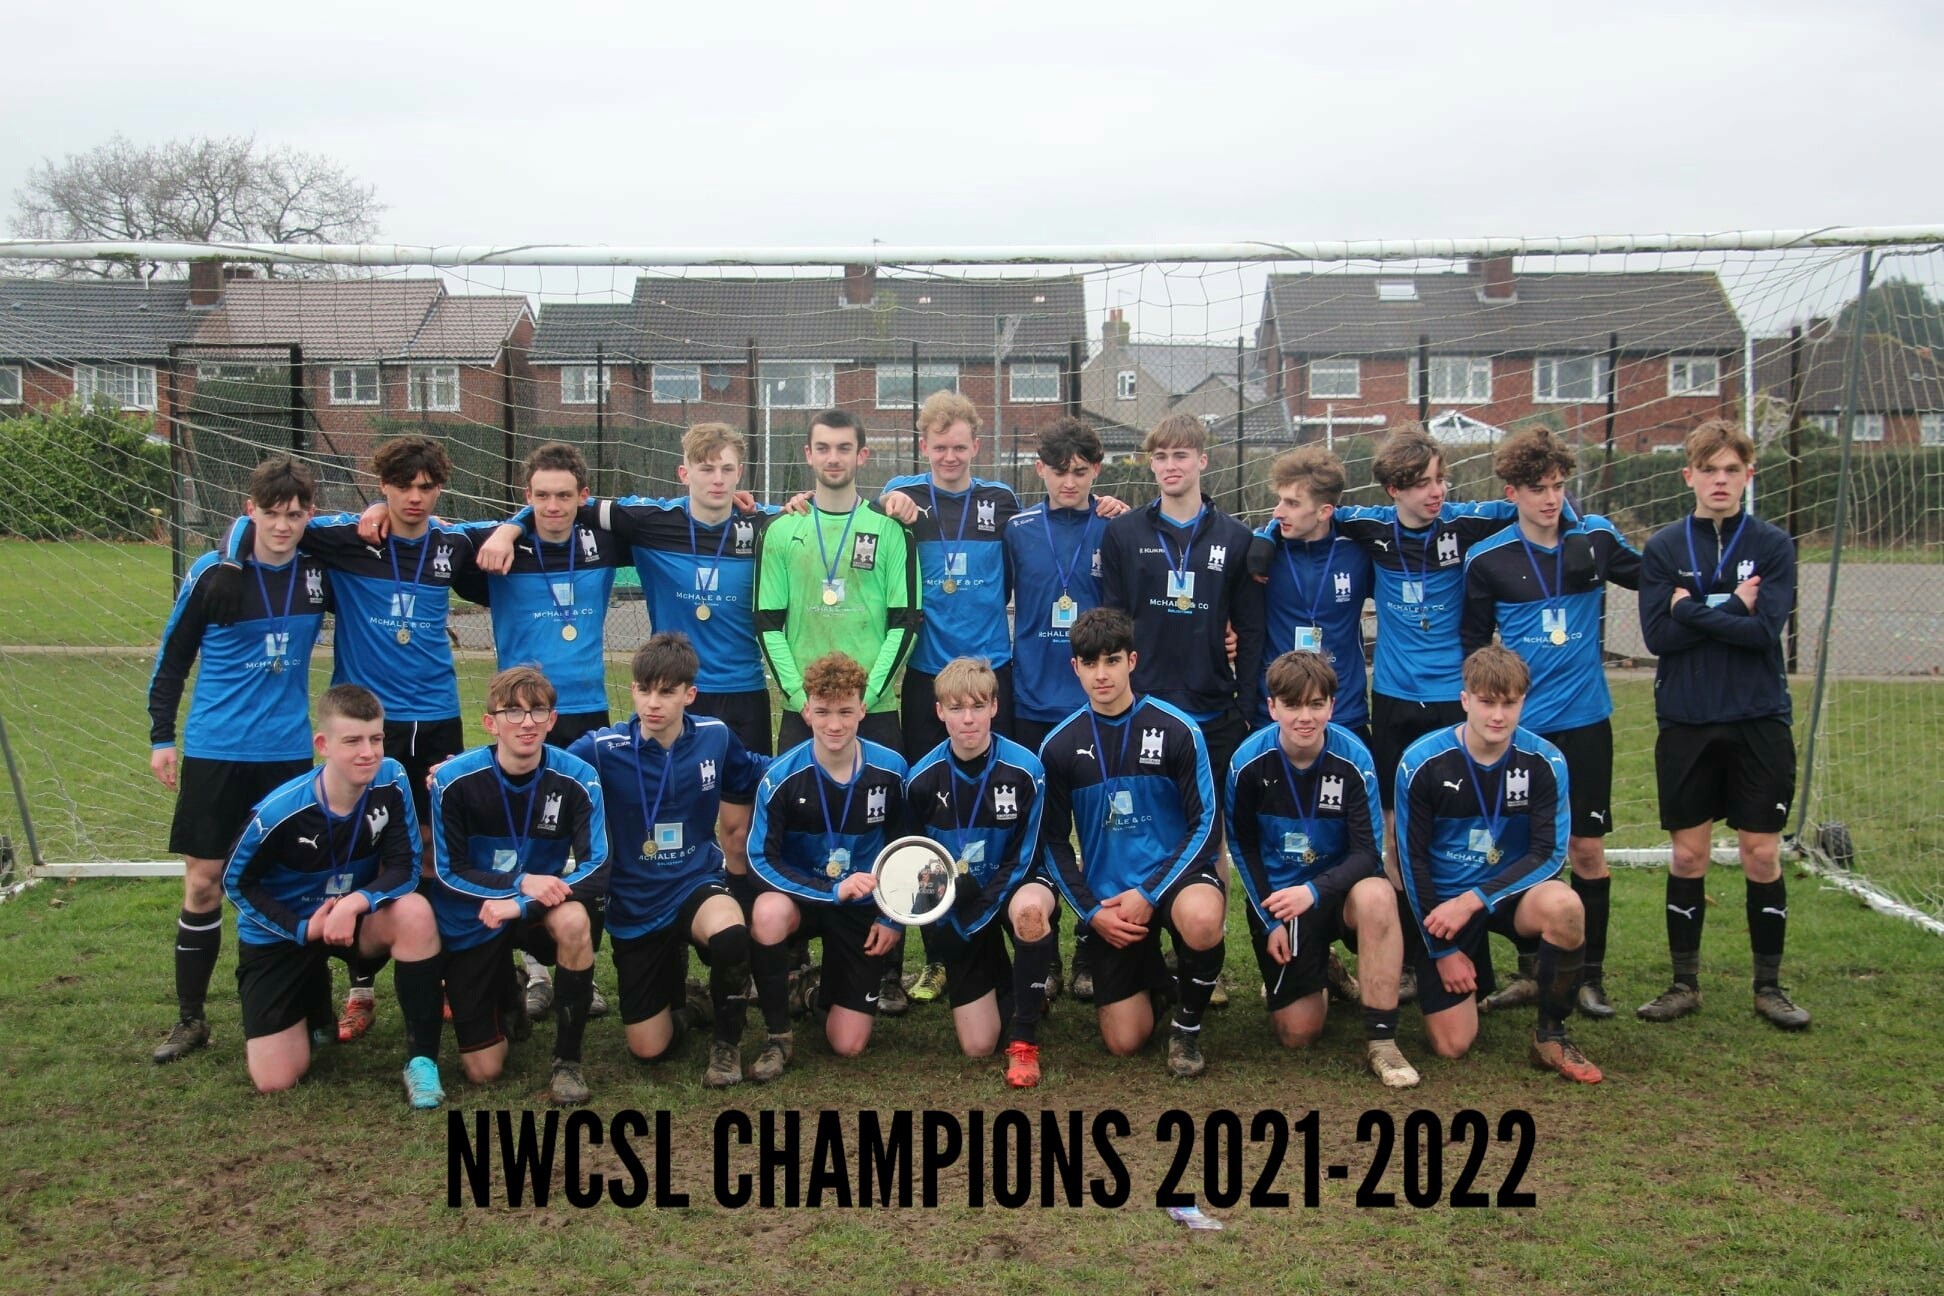 League title glory for the Knutsford Academy boys